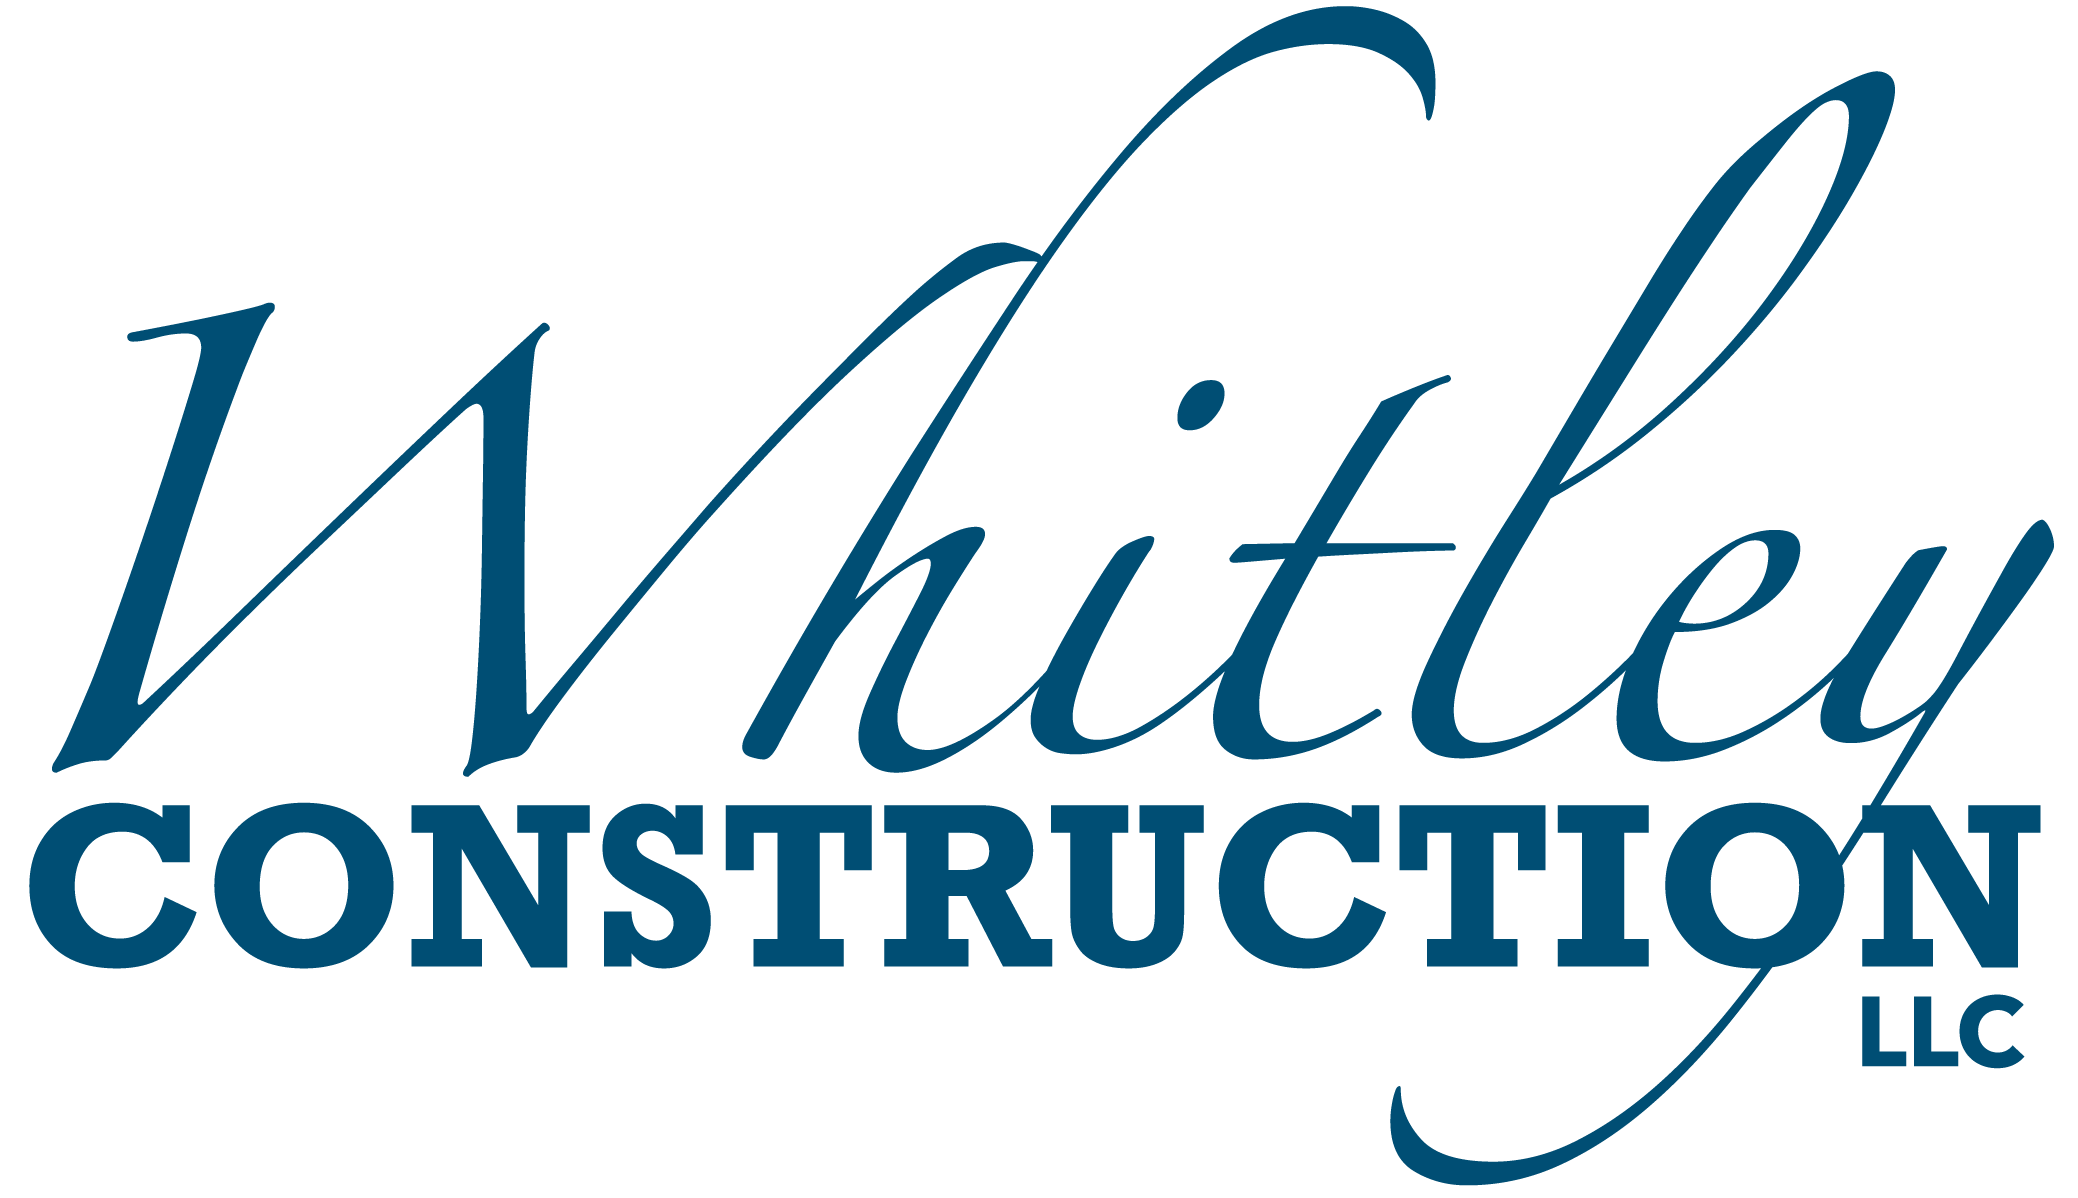 Whitley Construction LLC